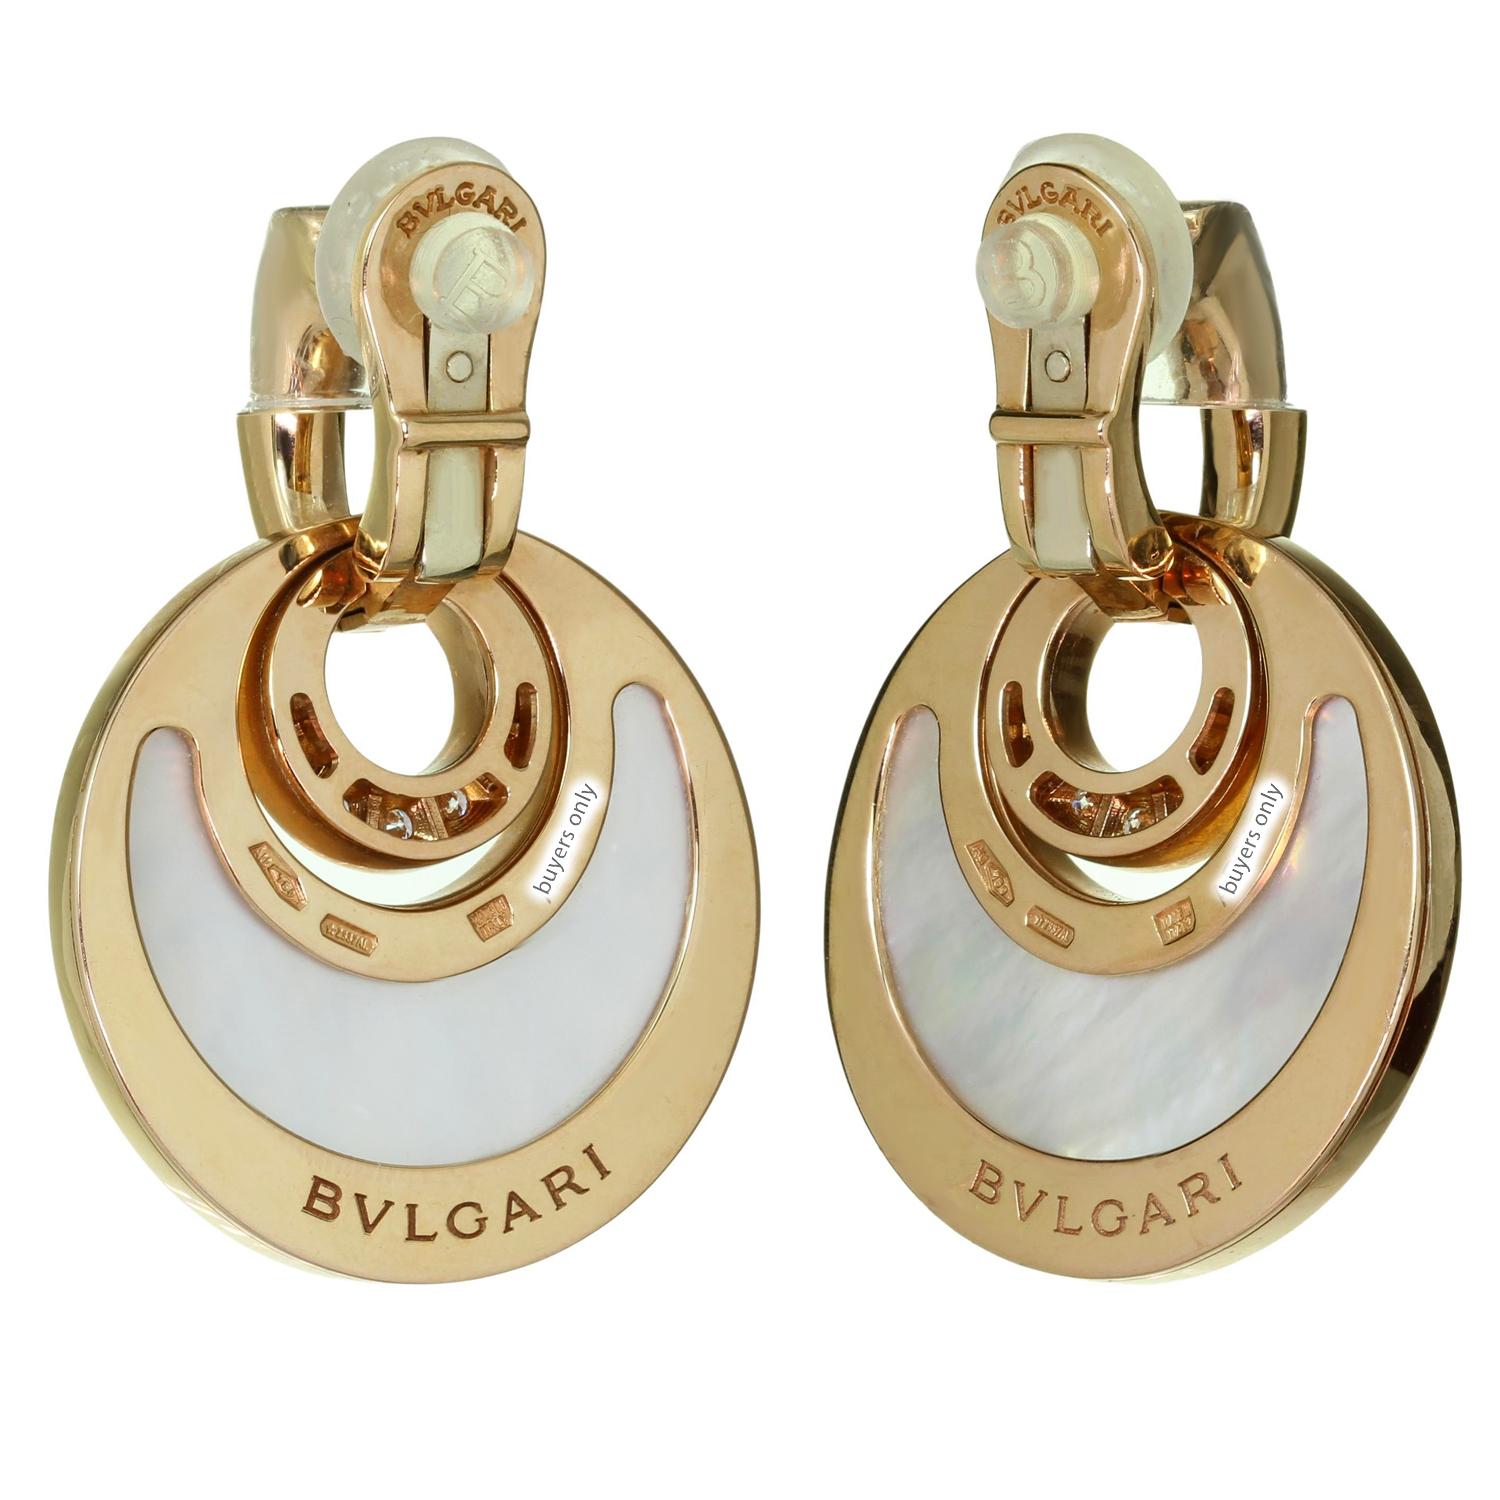 Brilliant Cut Bvlgari Intarsio Diamond Mother-Of-Pearl Rose Gold Pendant Earrings For Sale